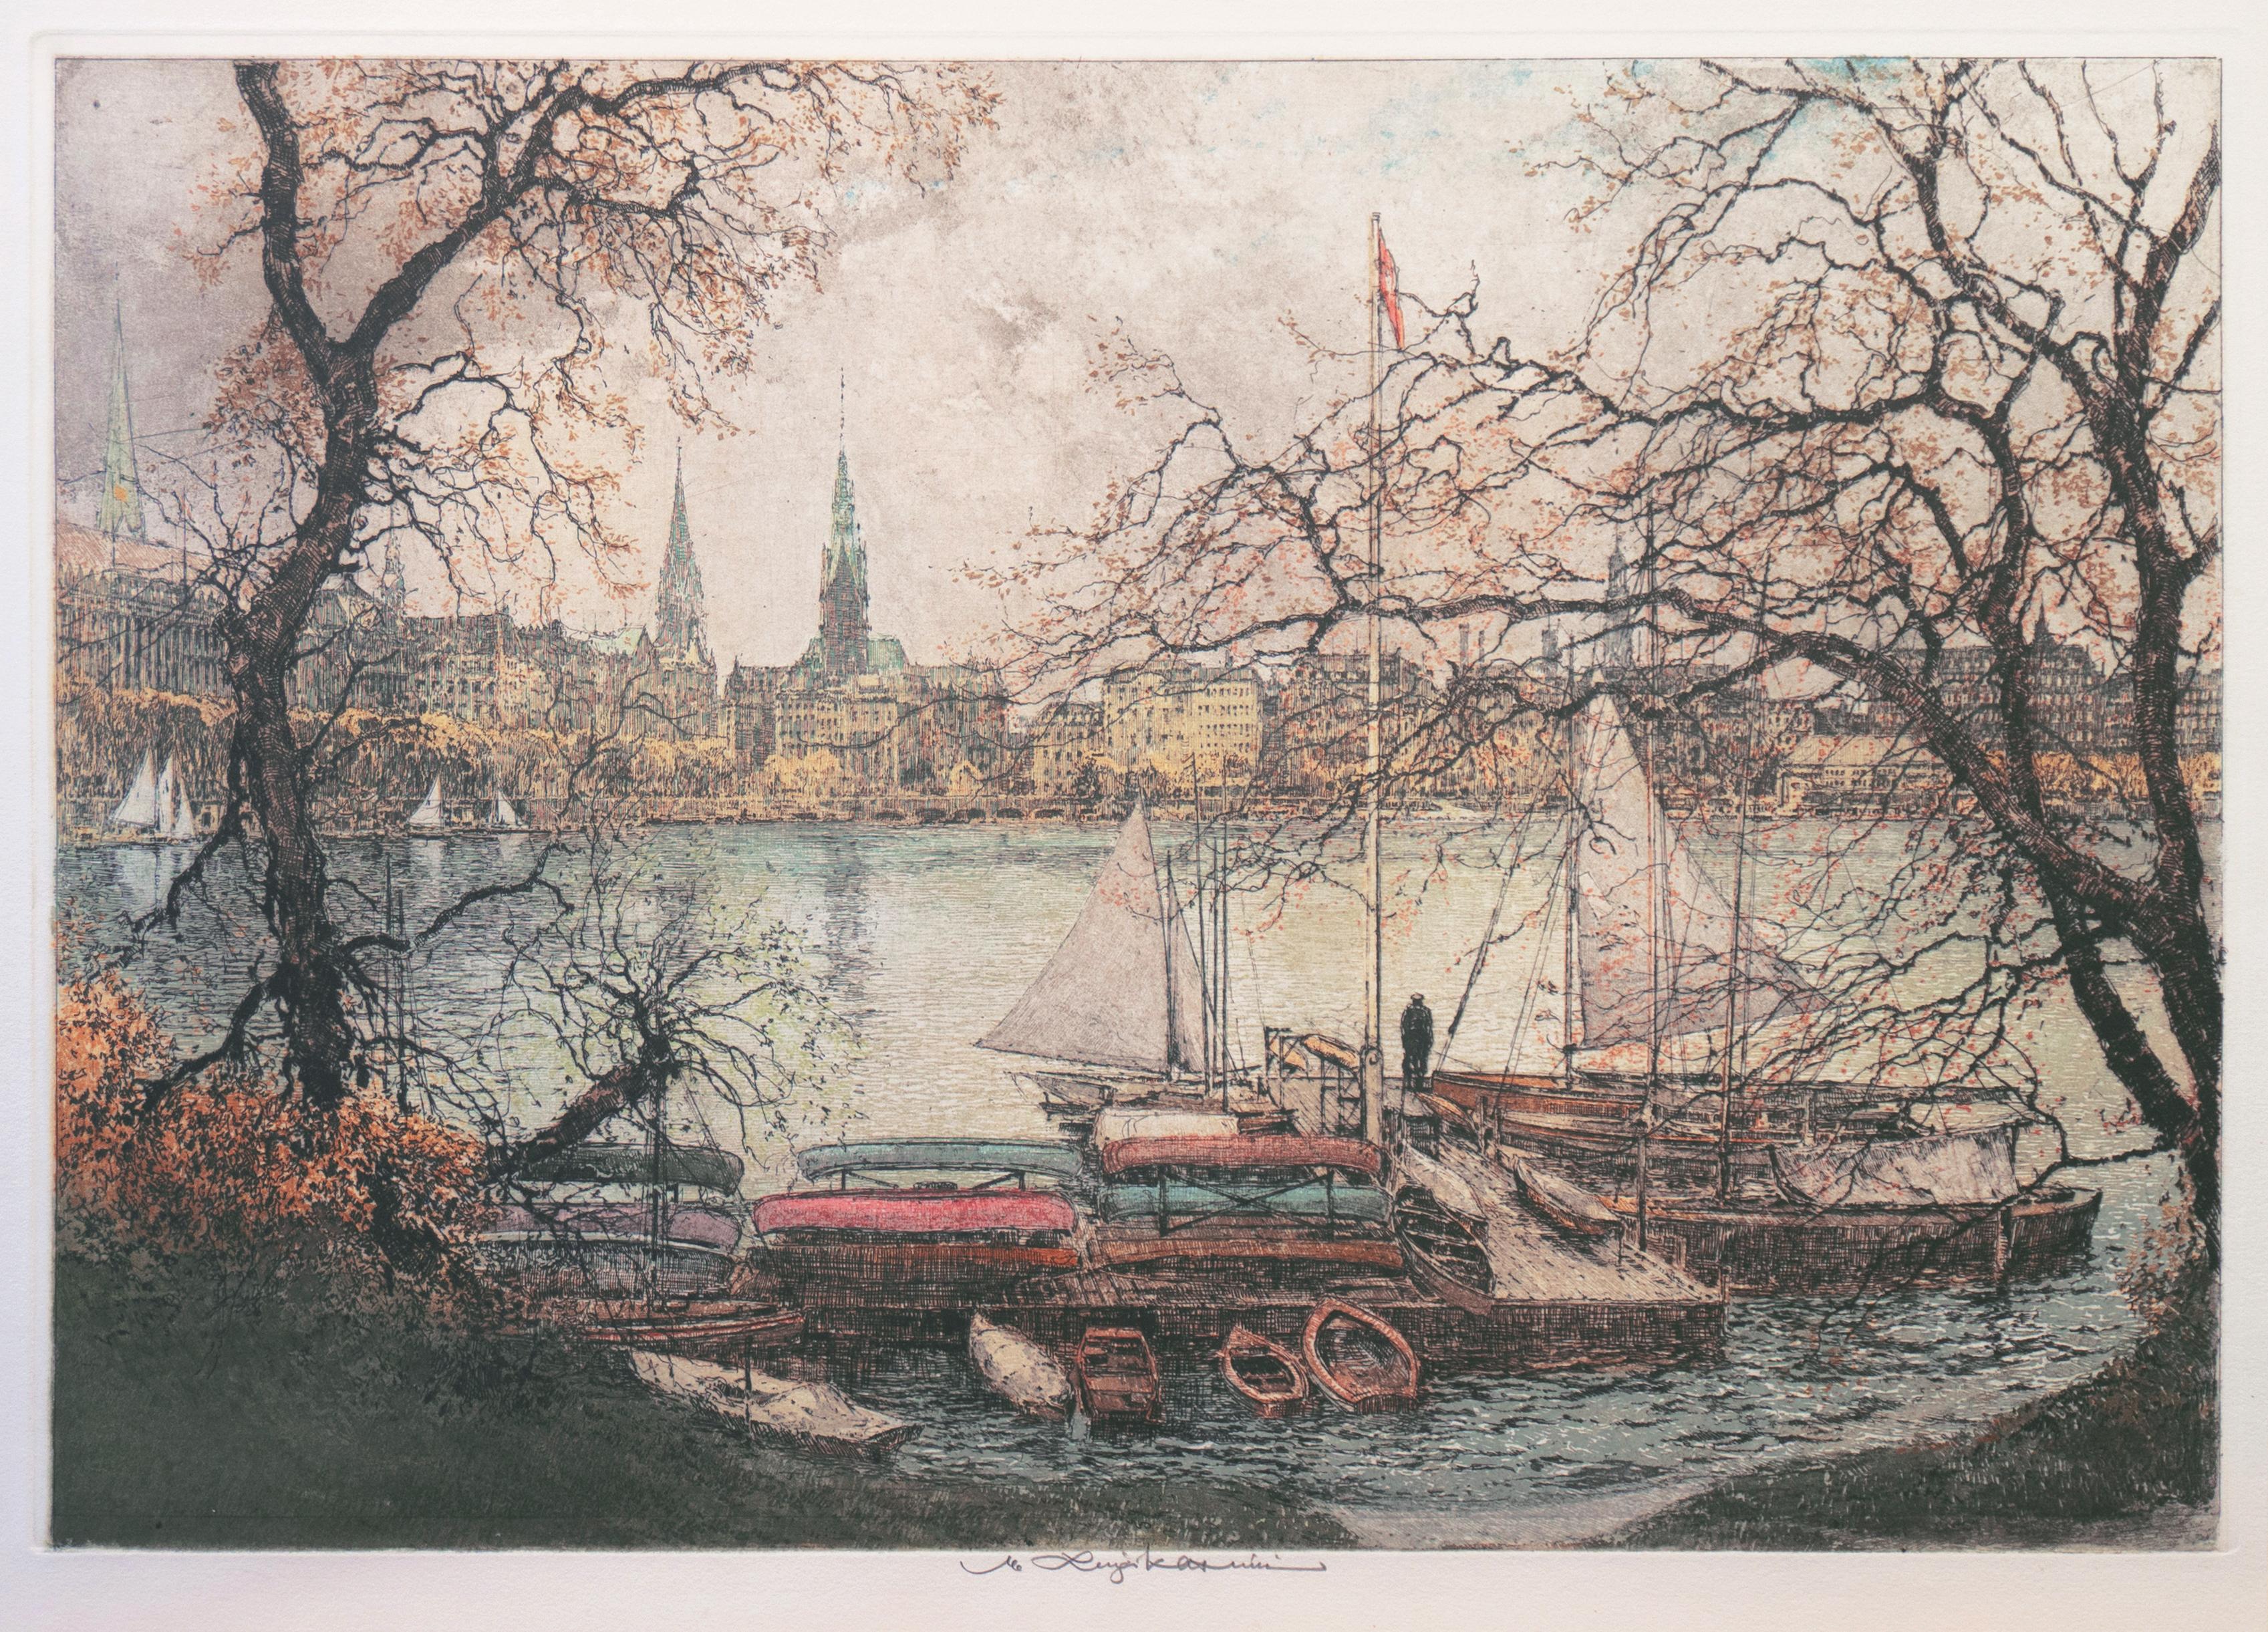 'On the Lake', Vienna Academy of Art, Metropolitan Museum, Smithsonian